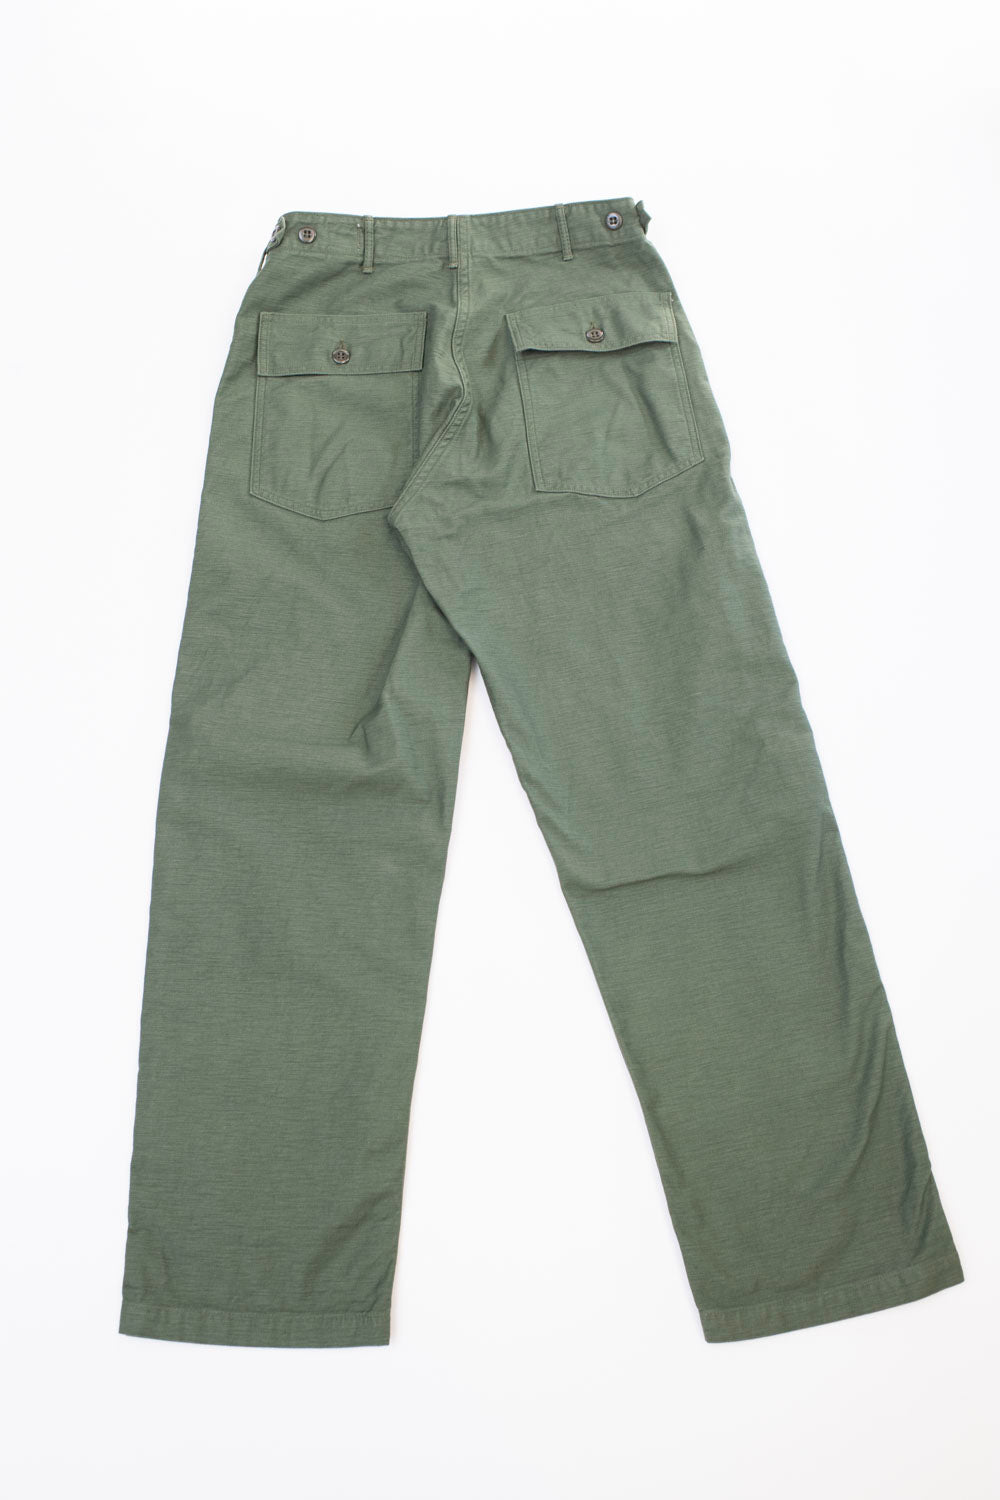 01-5002-16 - Fatigue Pants Reverse Sateen - Standard Fit - Olive ...